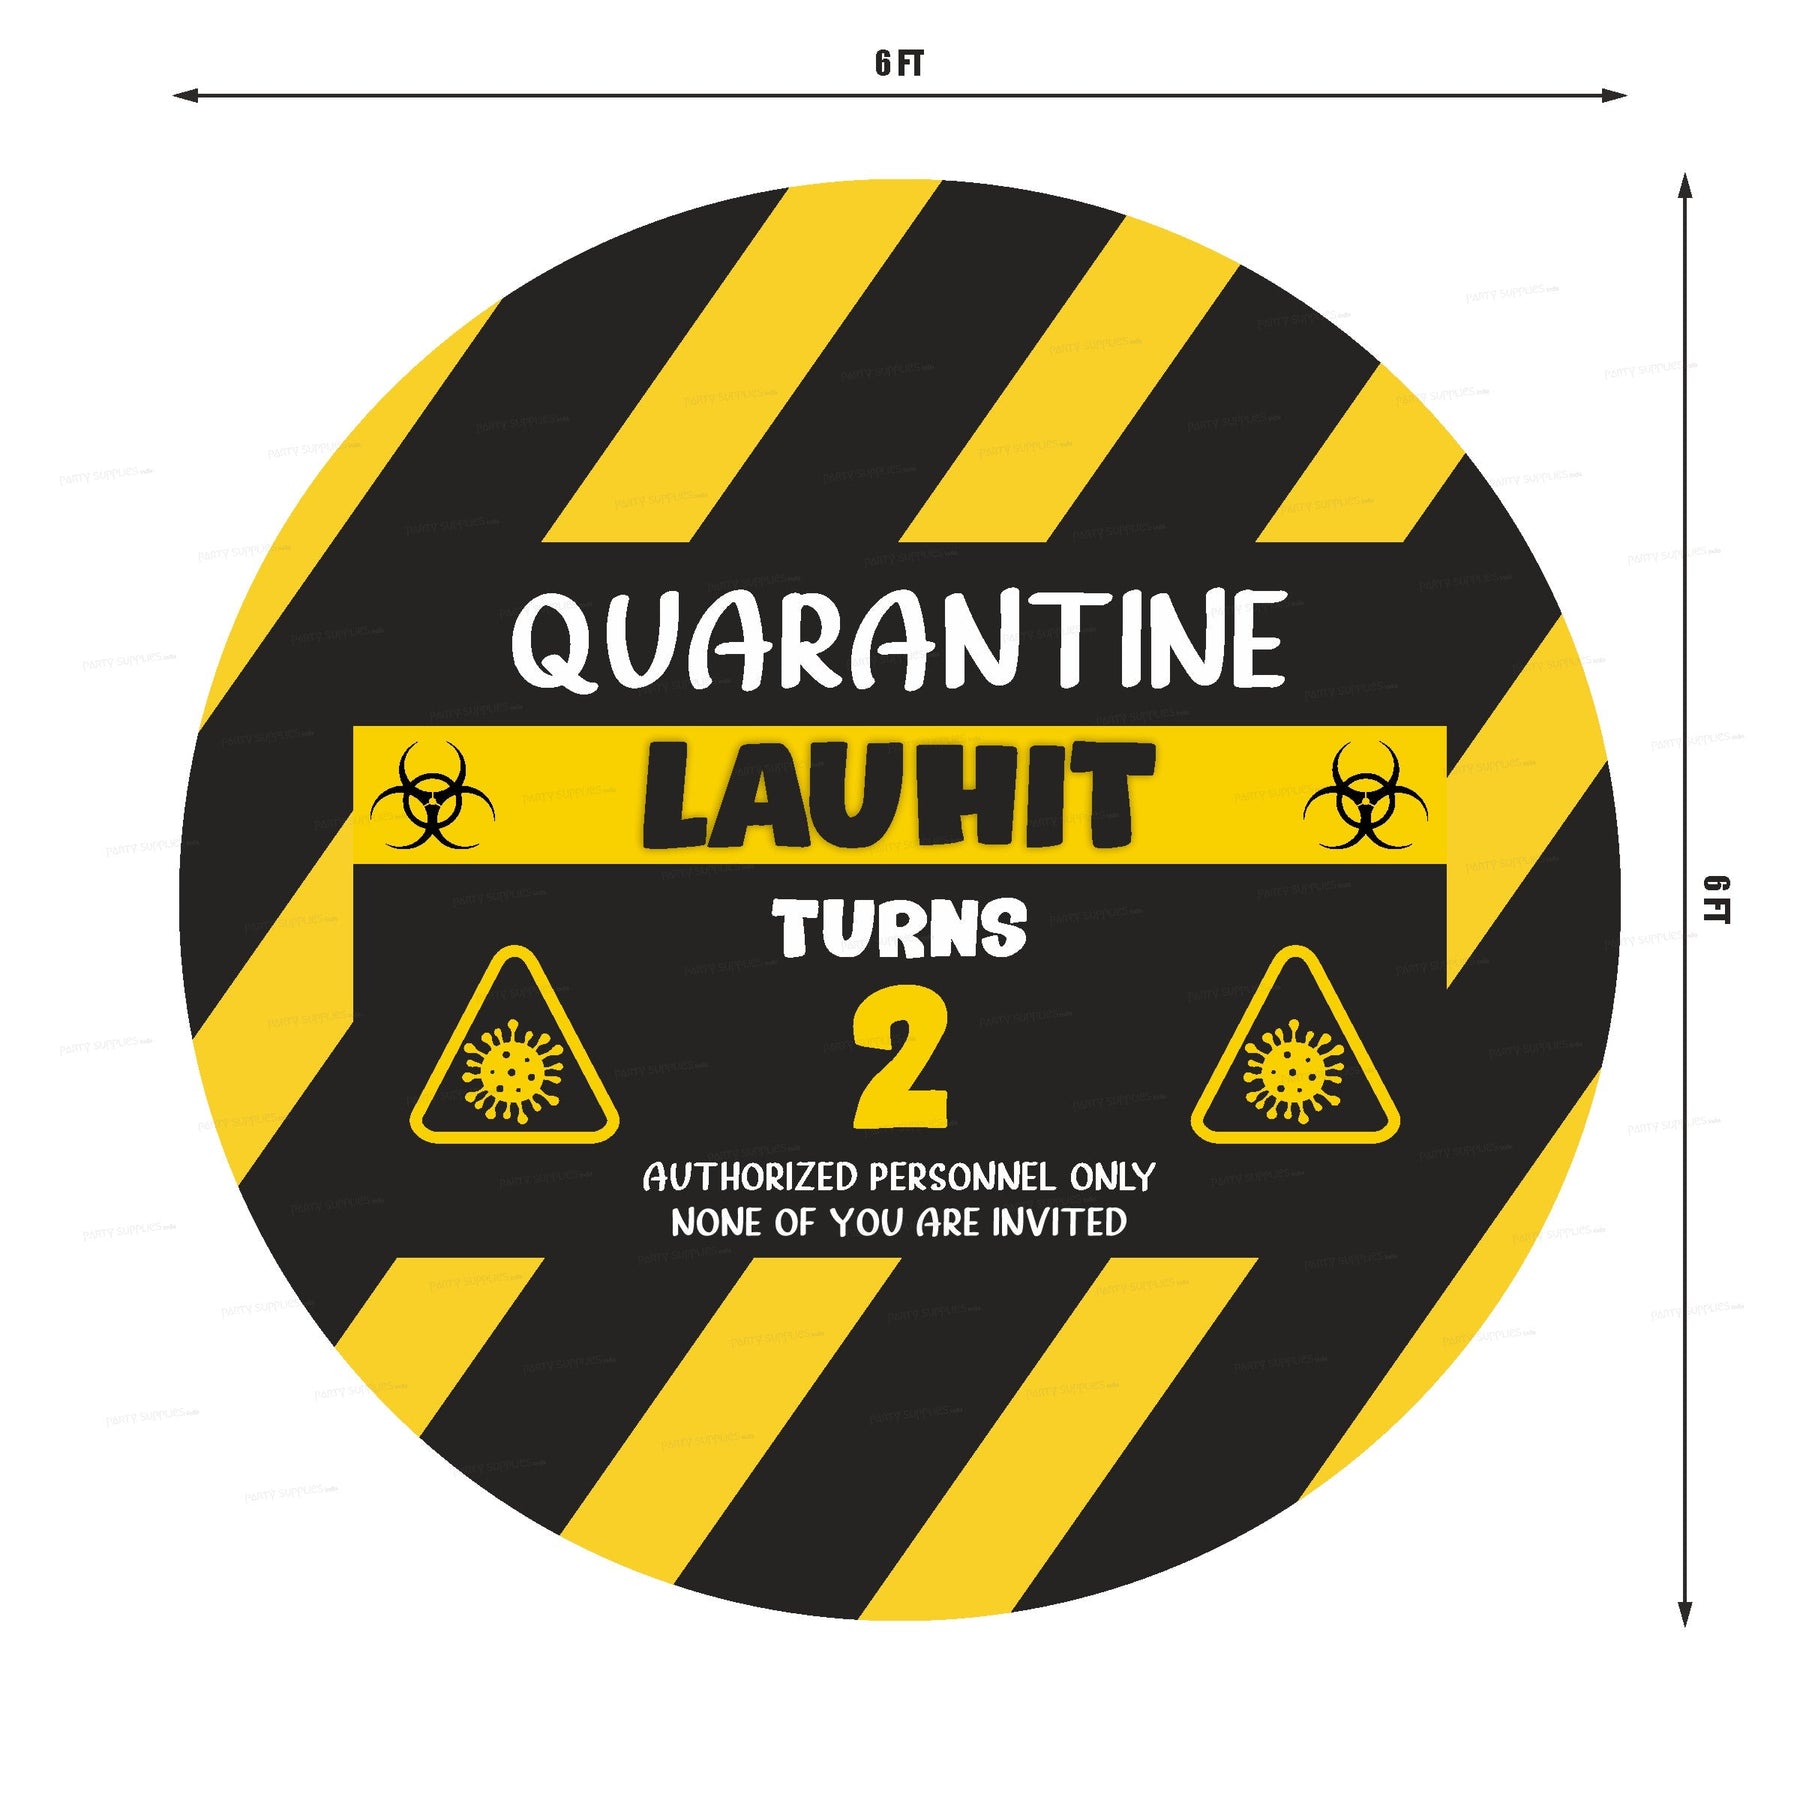 PSI Quarantine Theme Personalized Round Backdrop